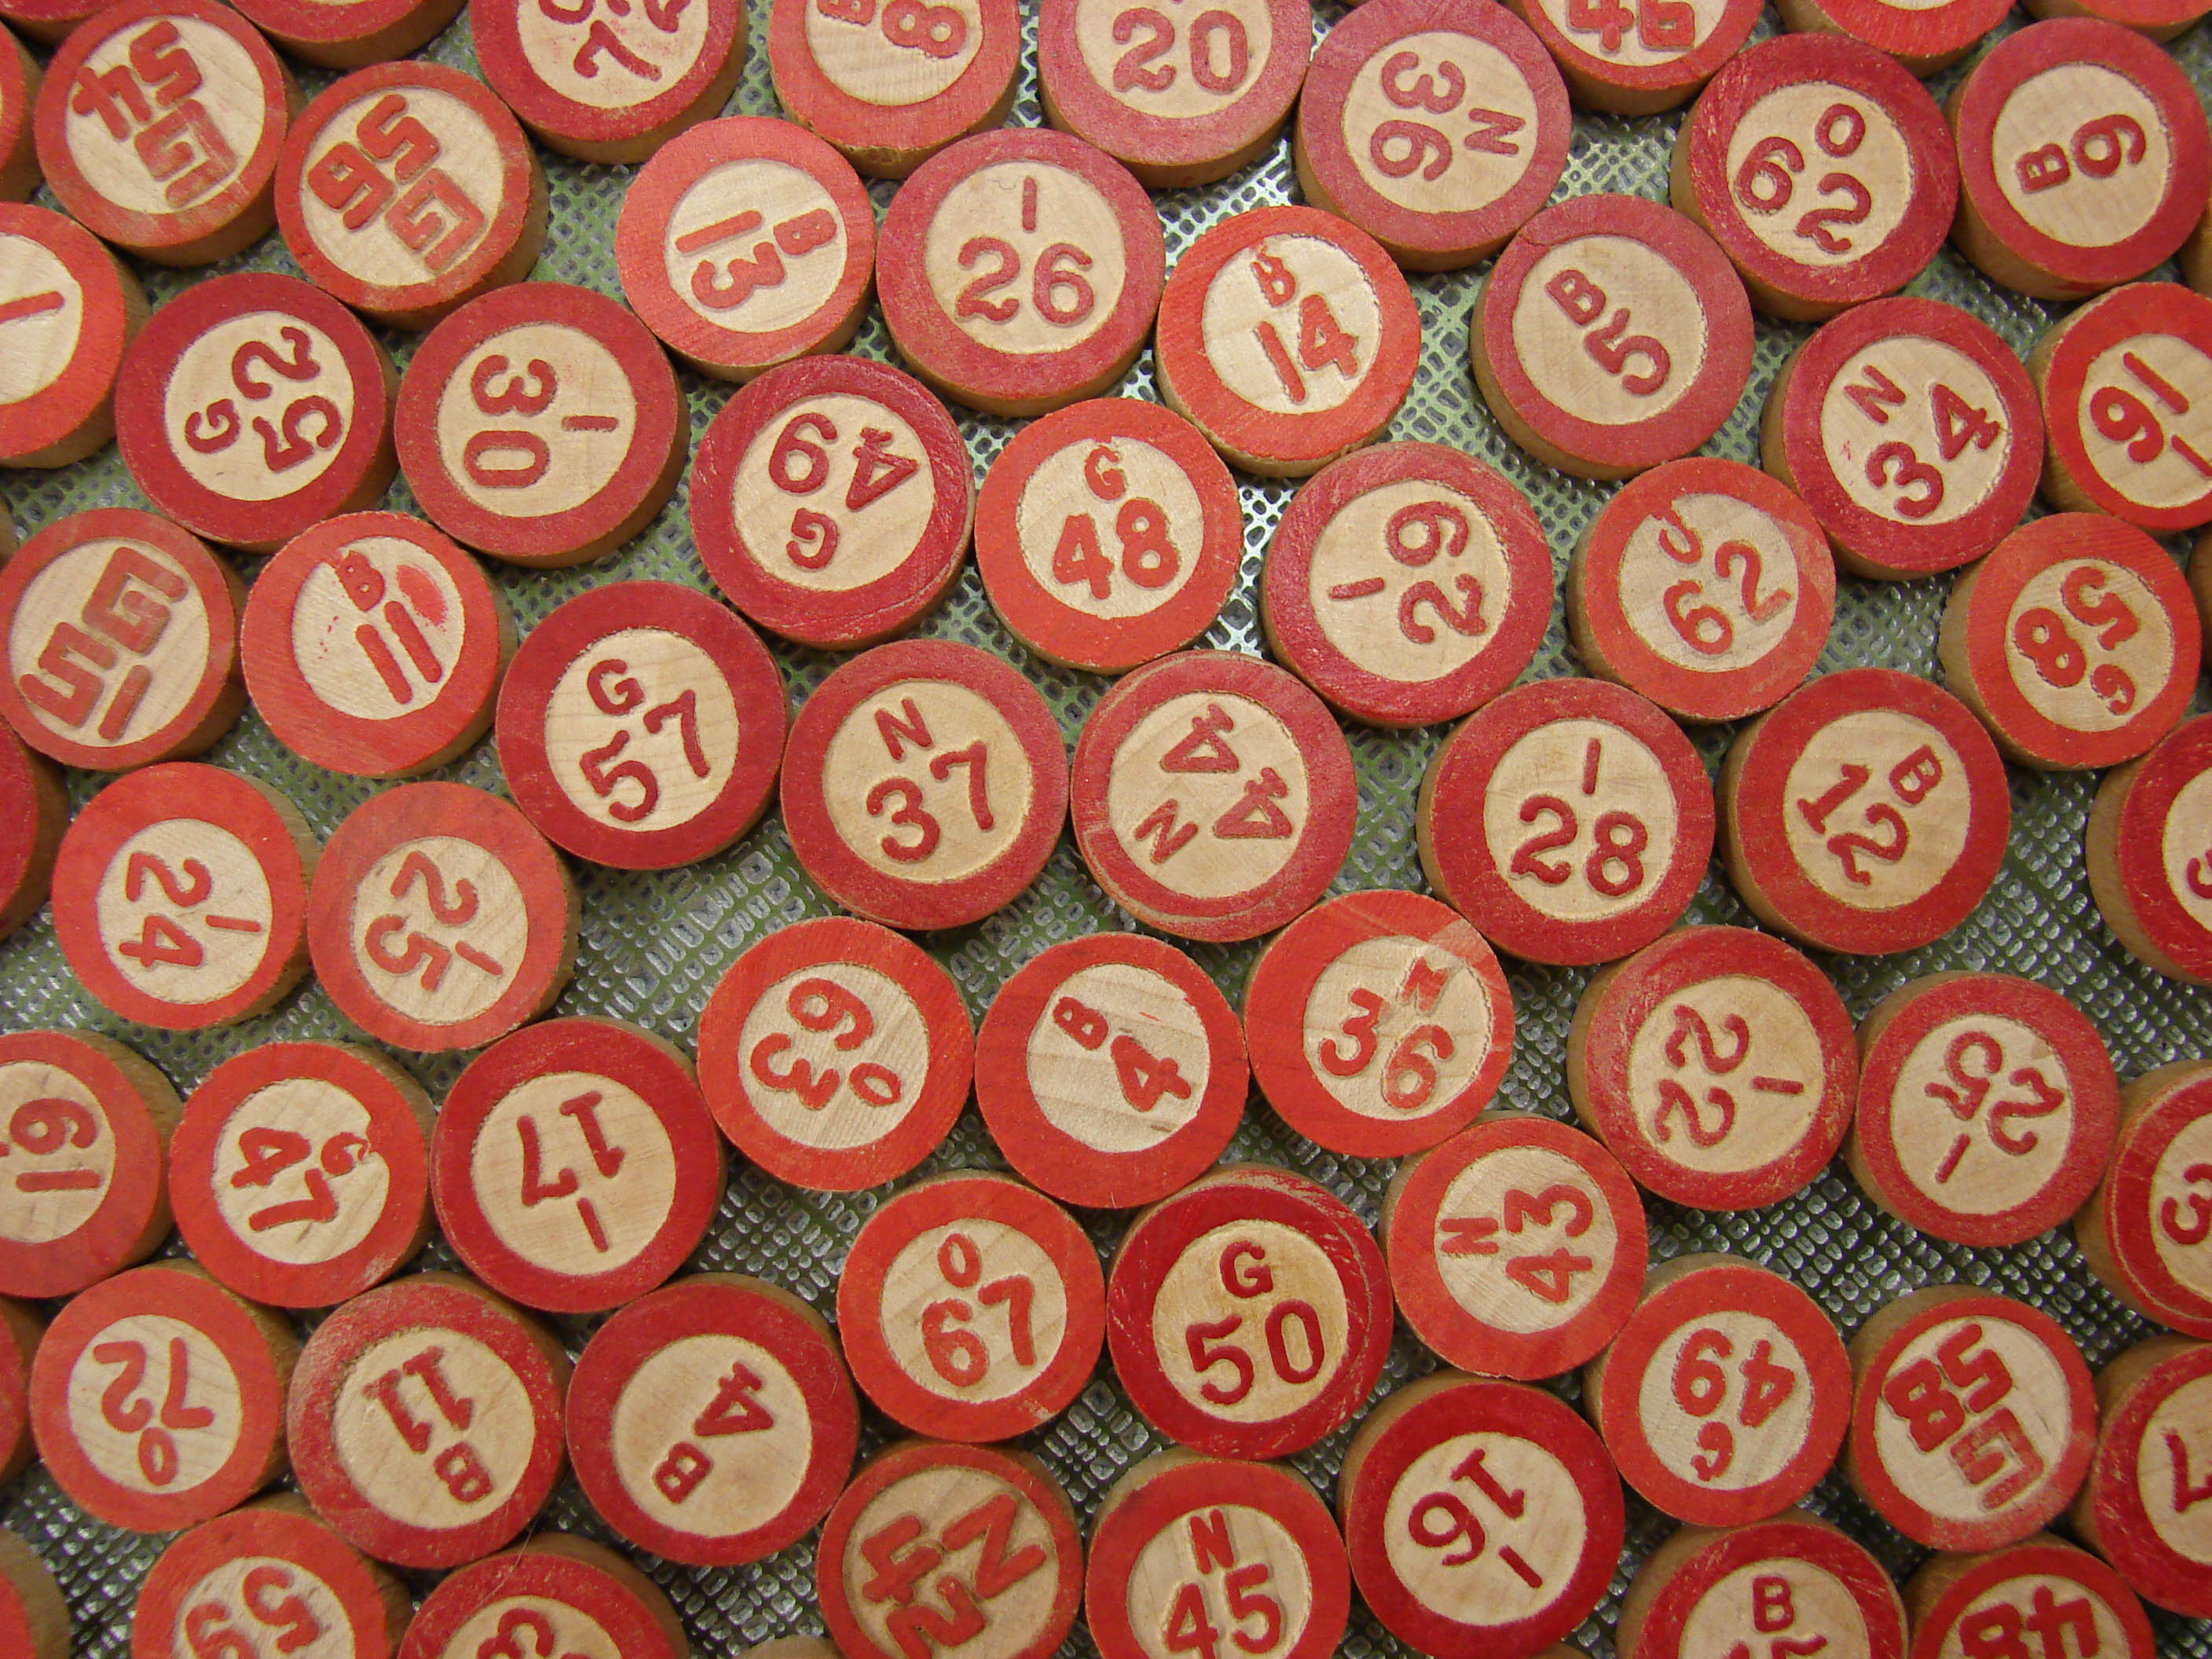 Bingo numbers (red)